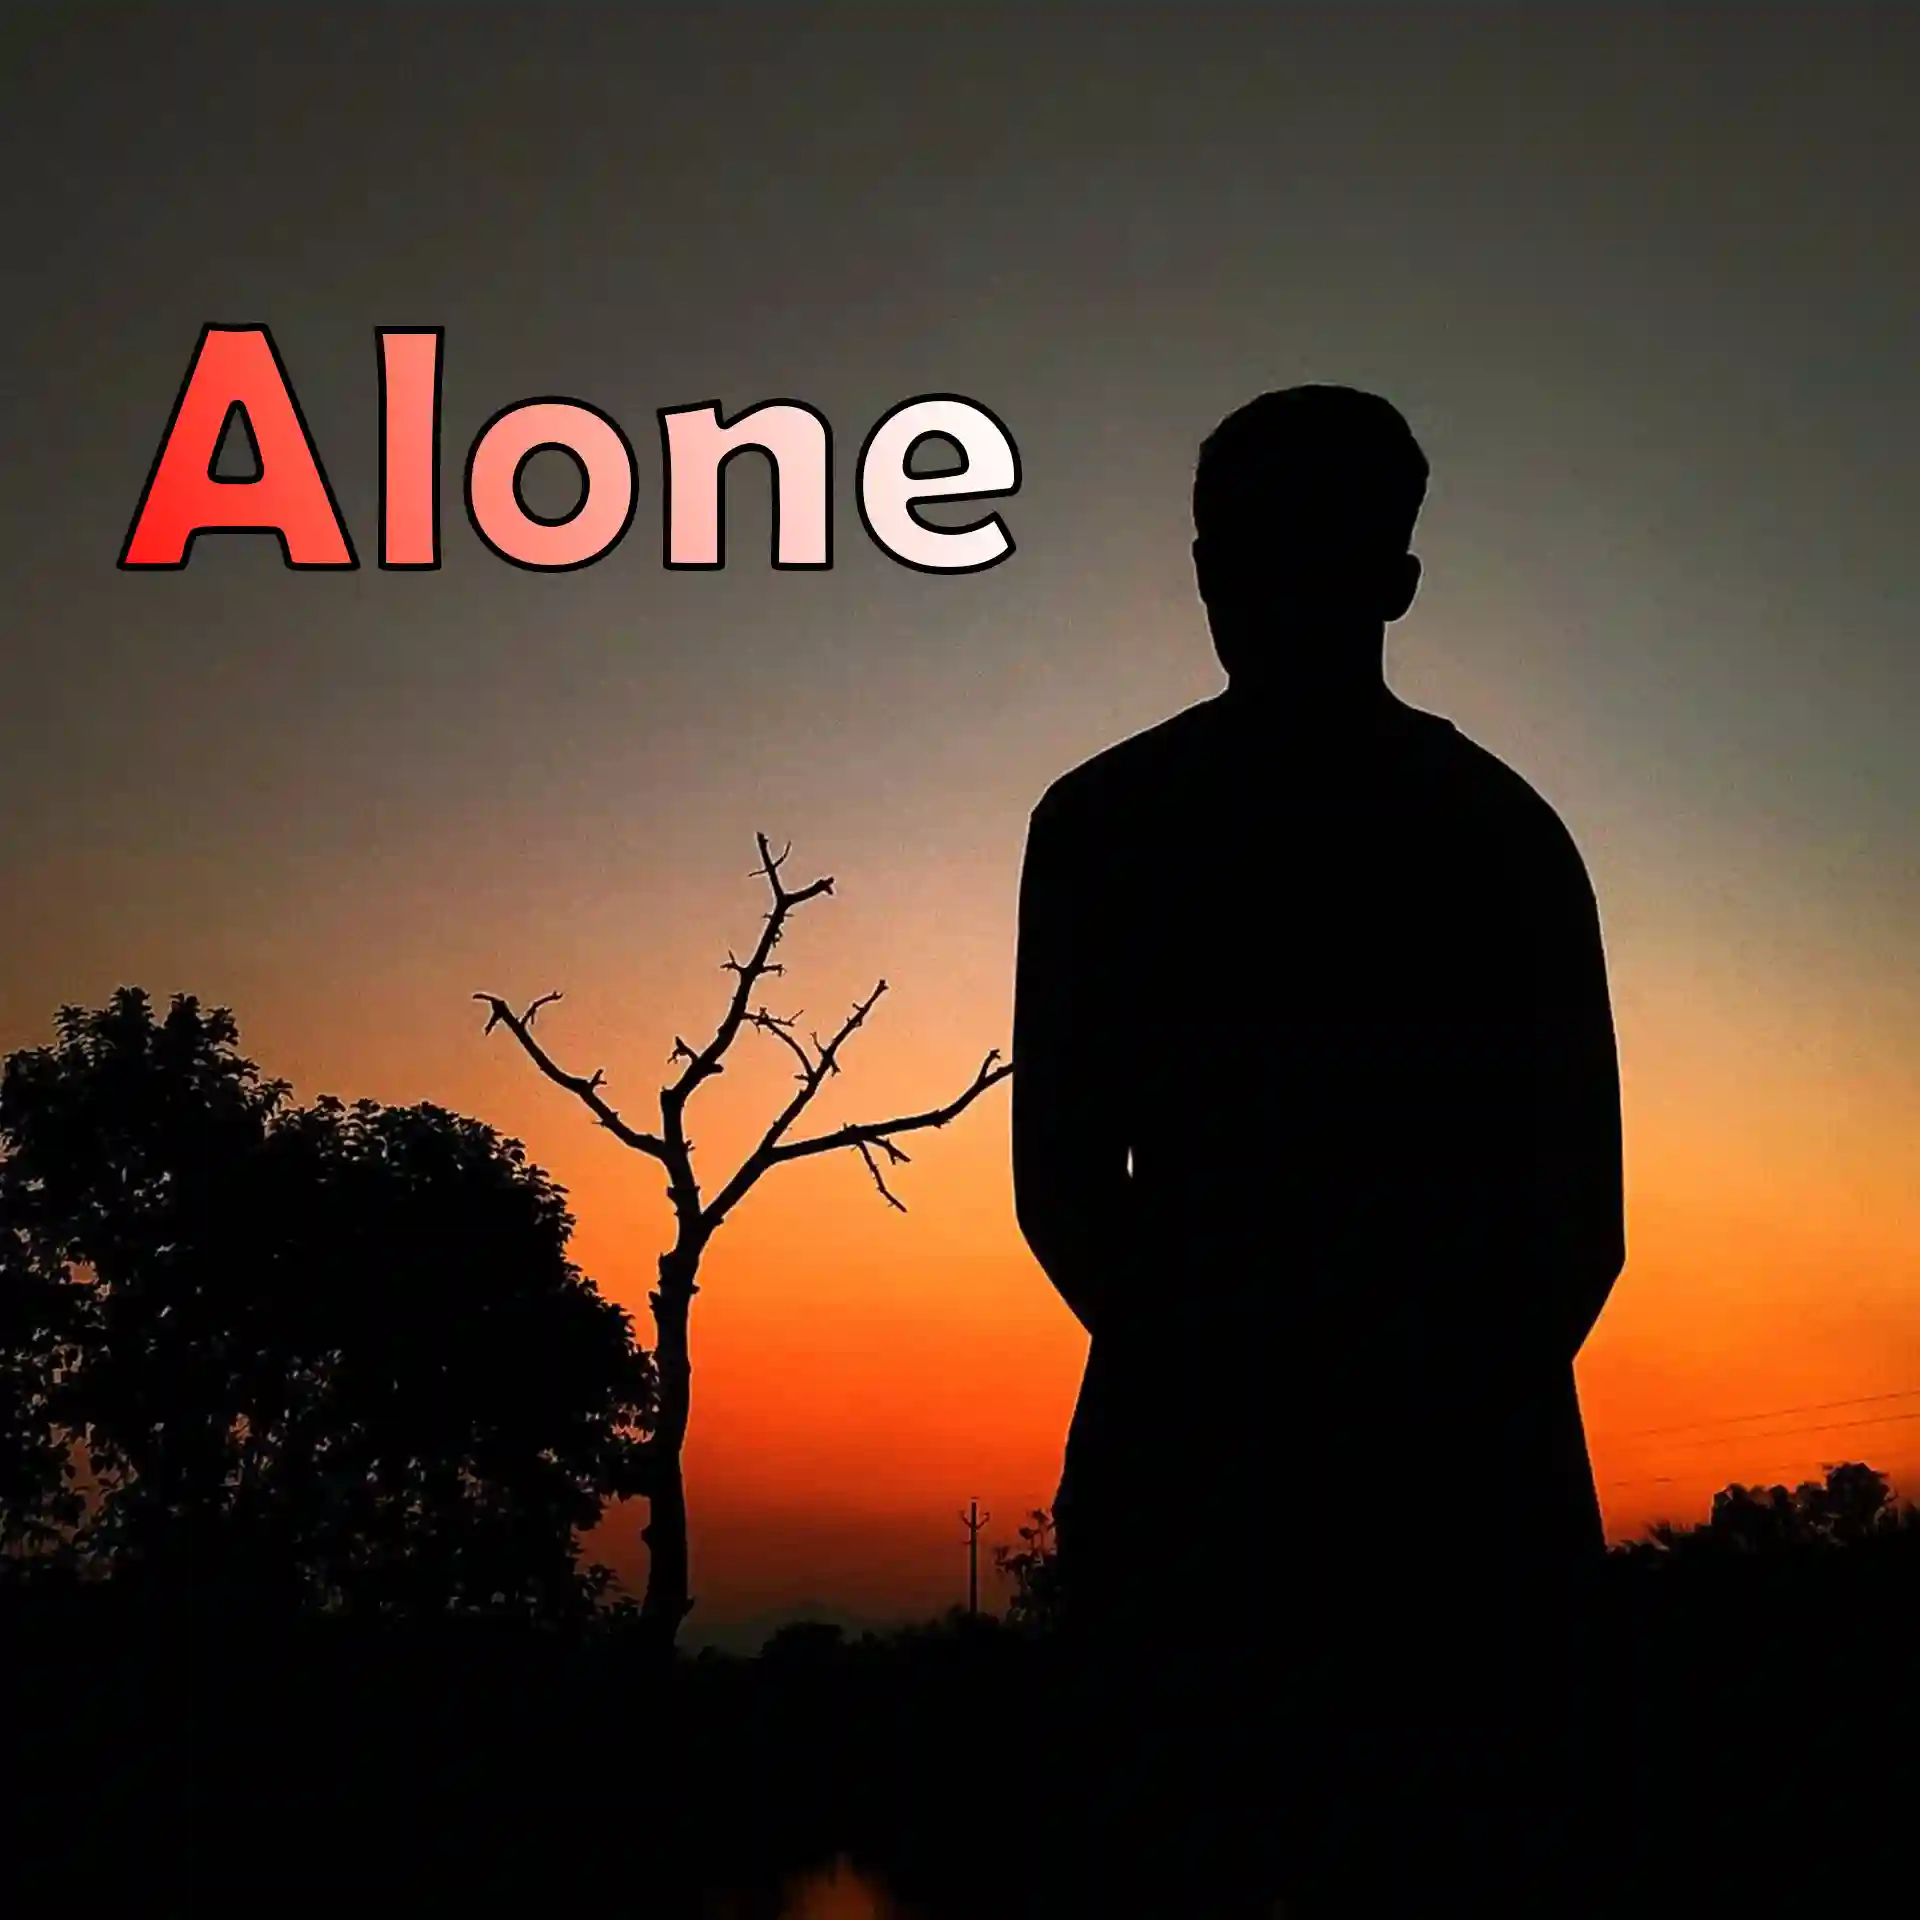 Alone DP Image